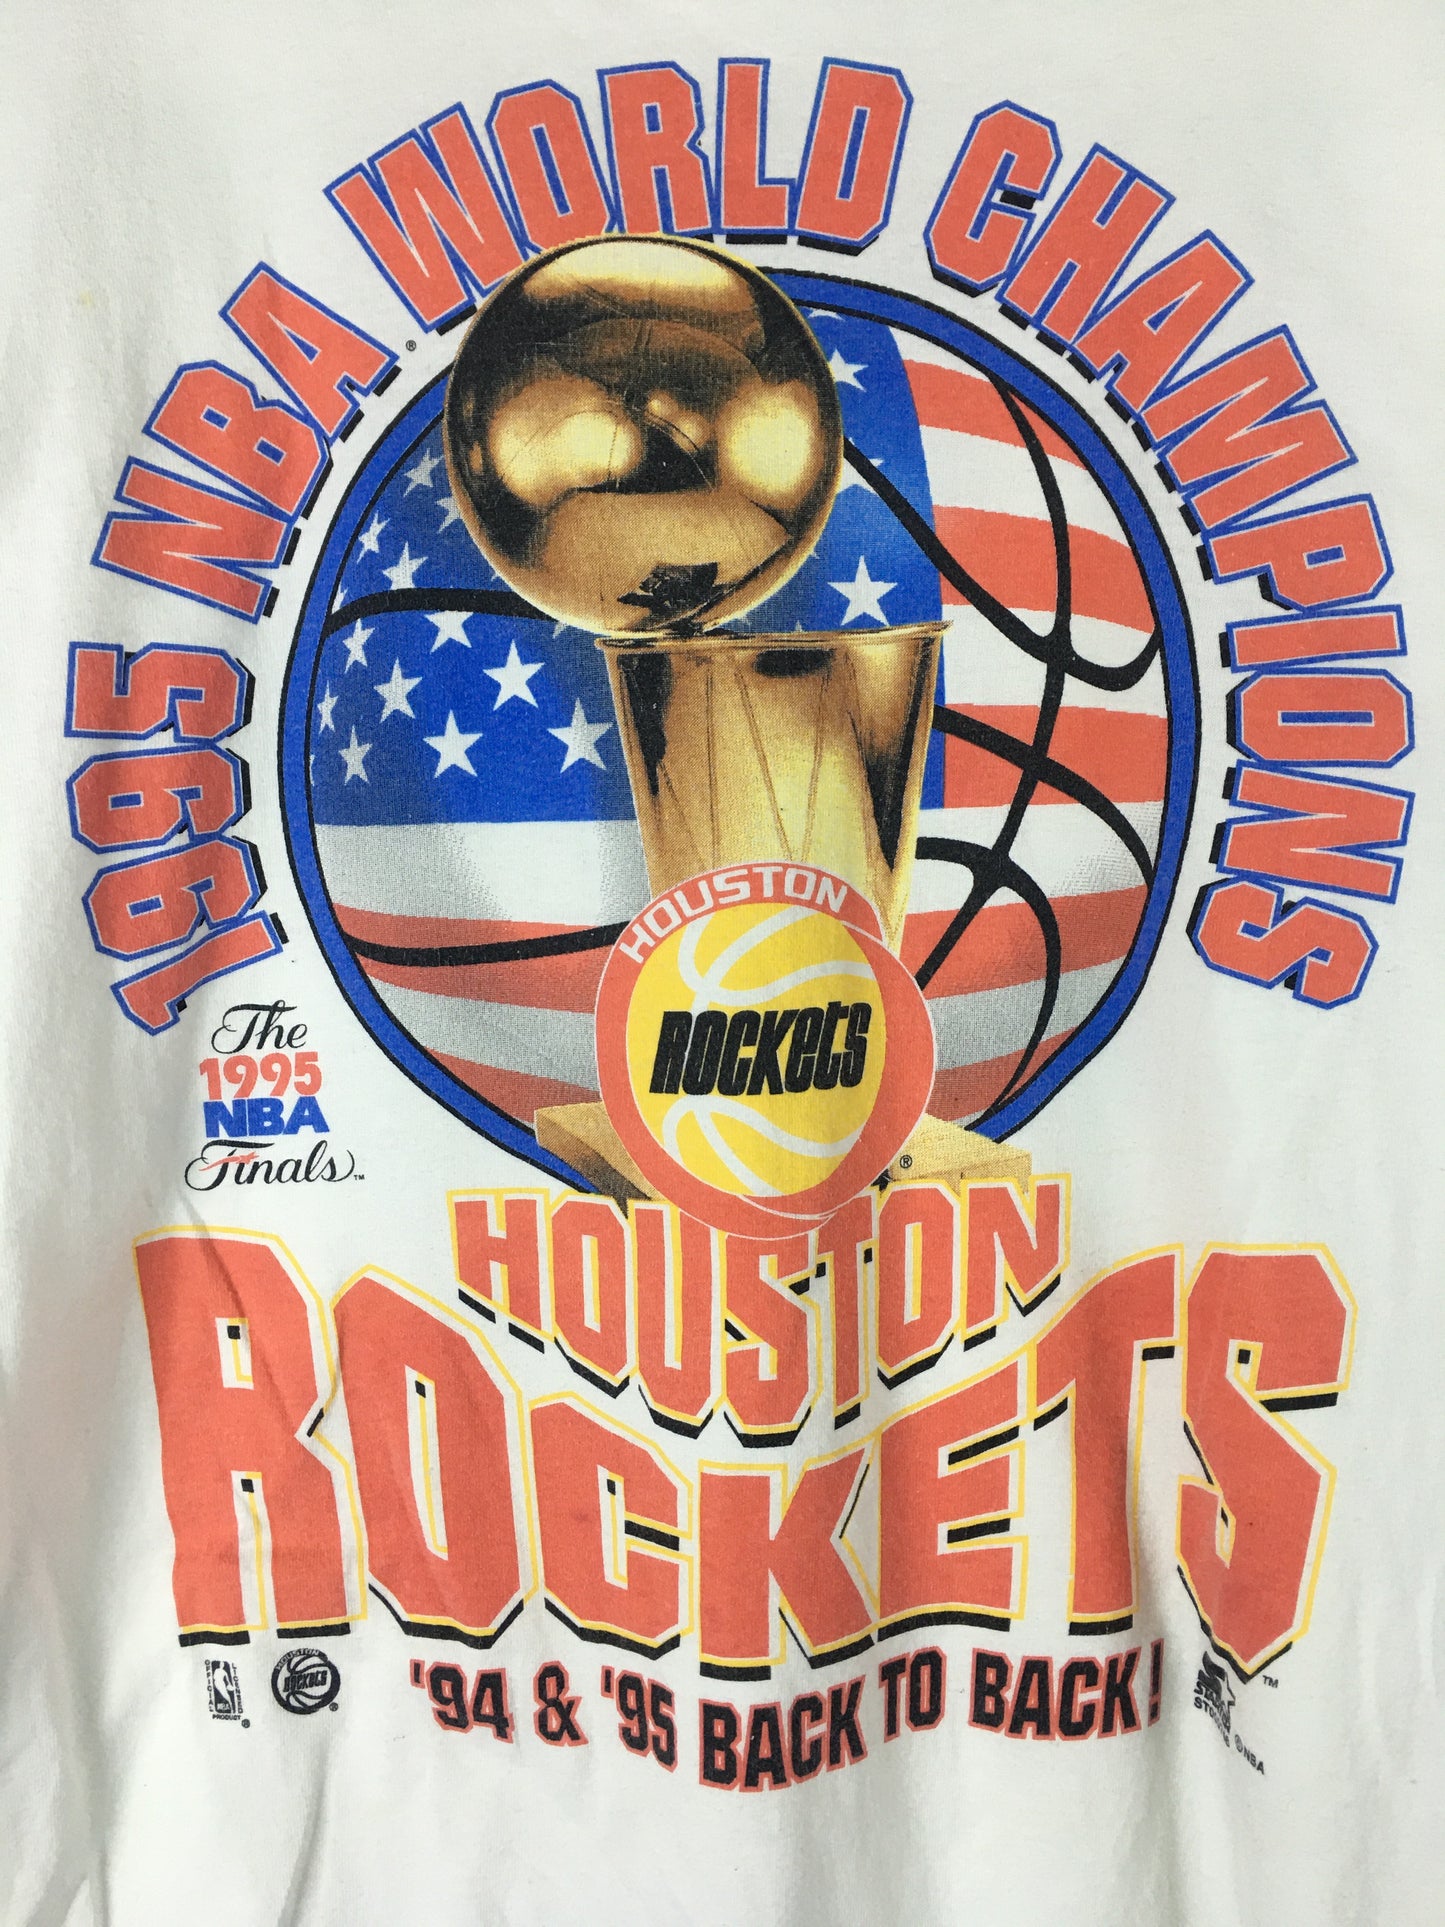 Vintage Houston Rockets 1994-1995 Back to Back NBA Champion T-shirt